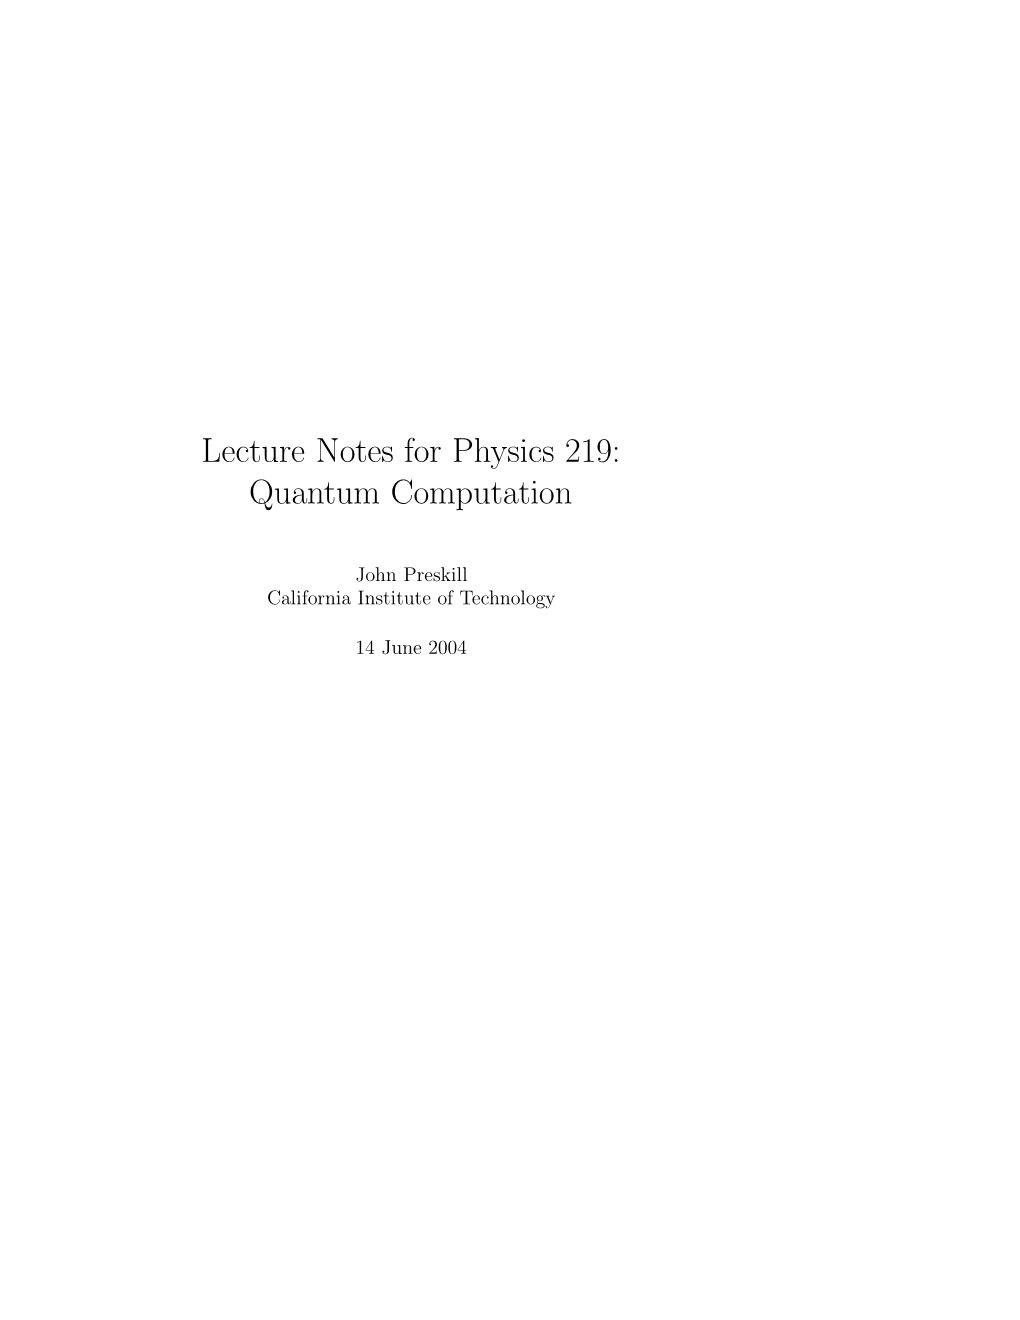 Lecture Notes for Physics 219: Quantum Computation